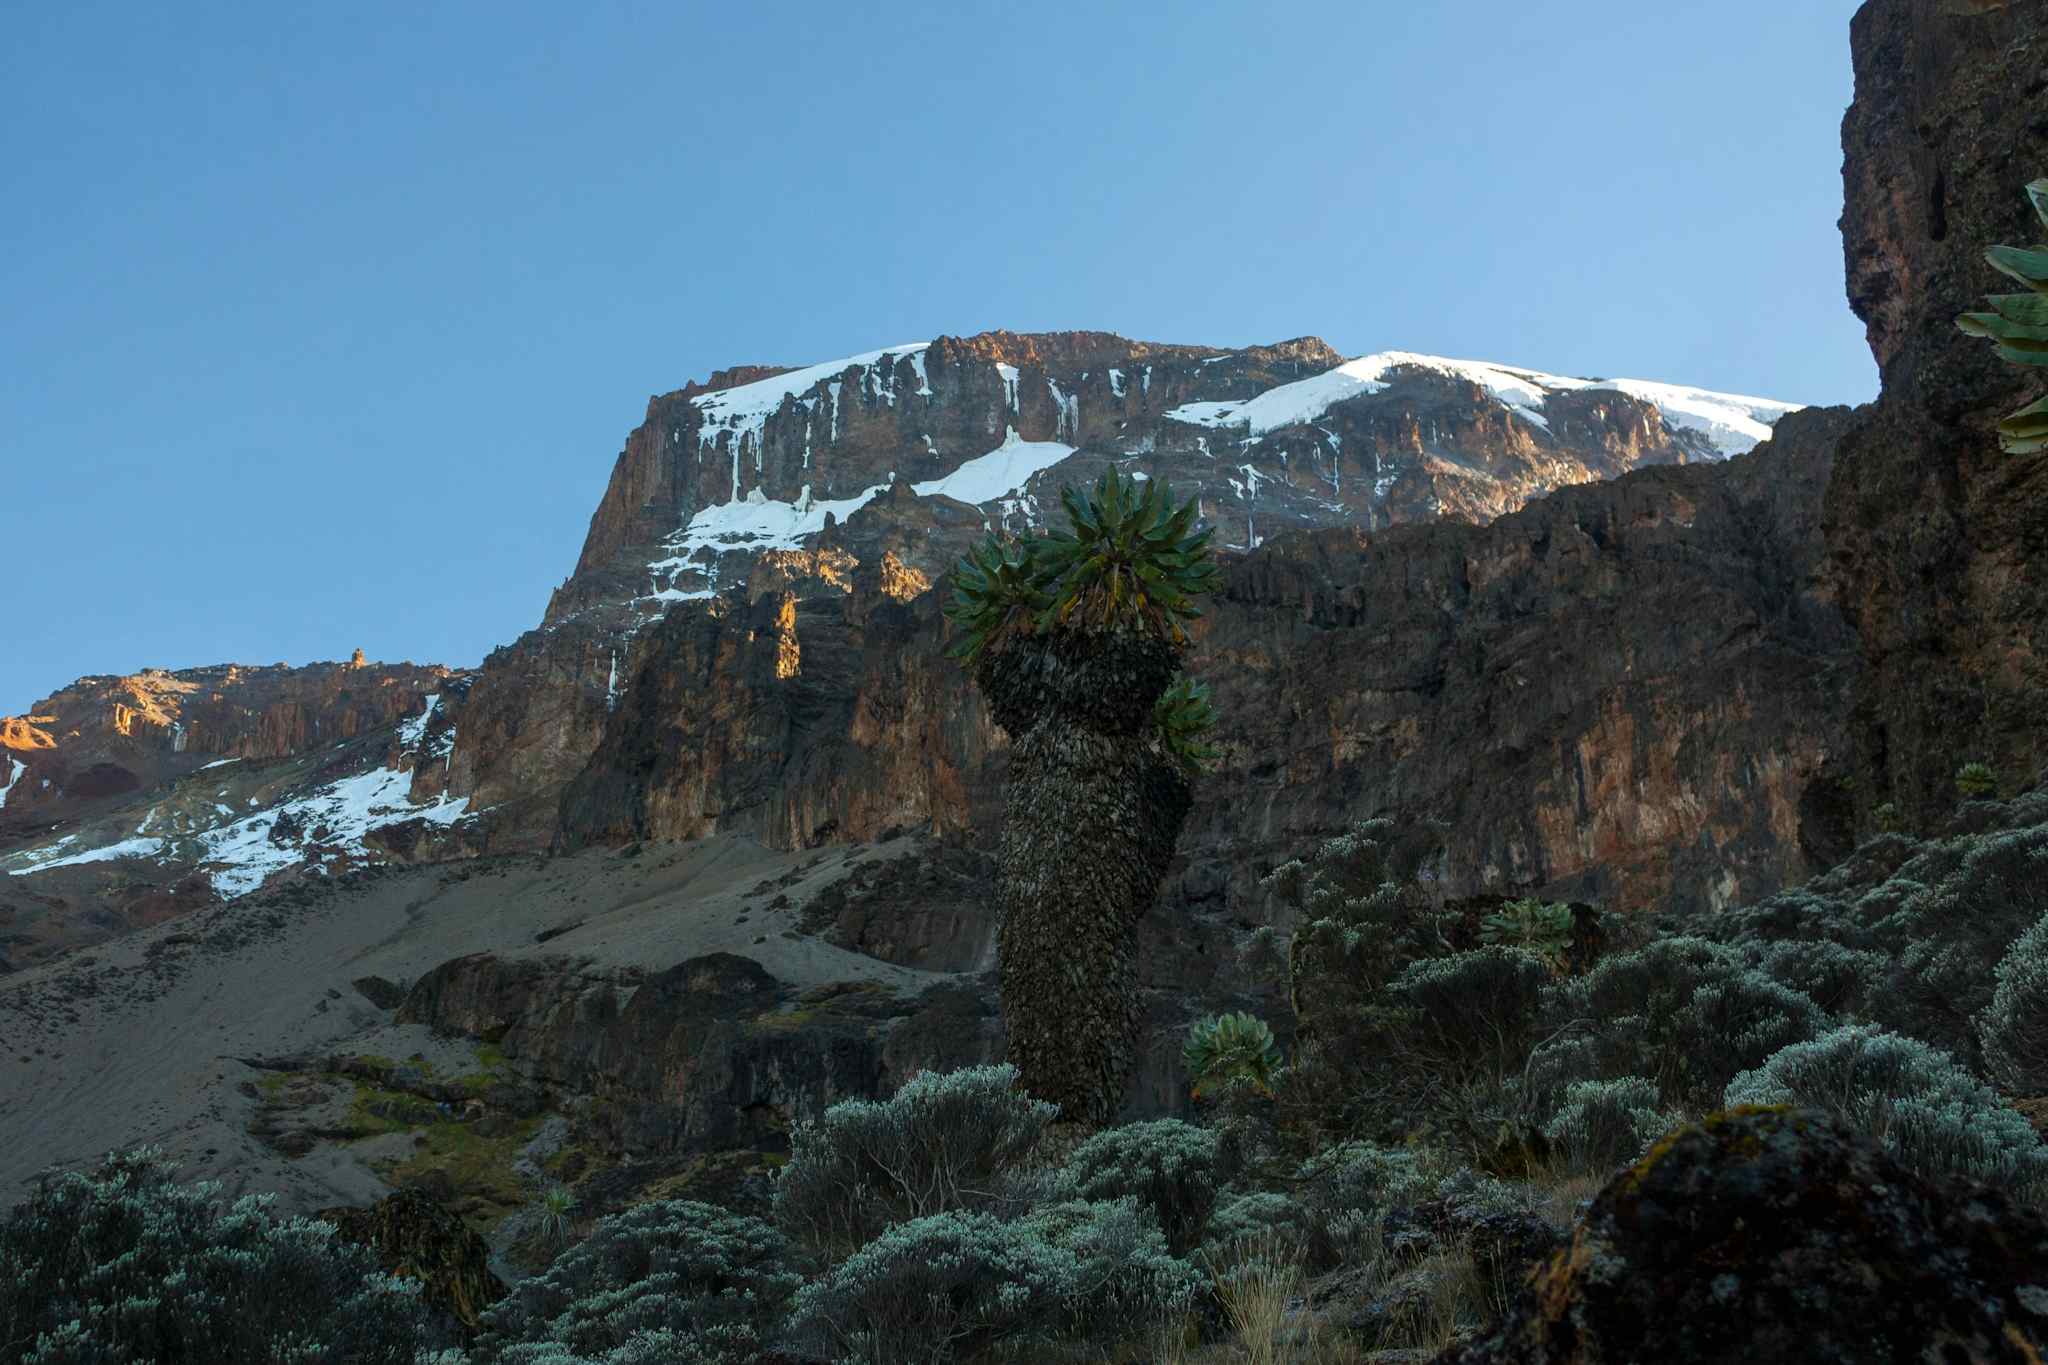 The Barranco Wall, Mount Kilimanjaro, Tanzania